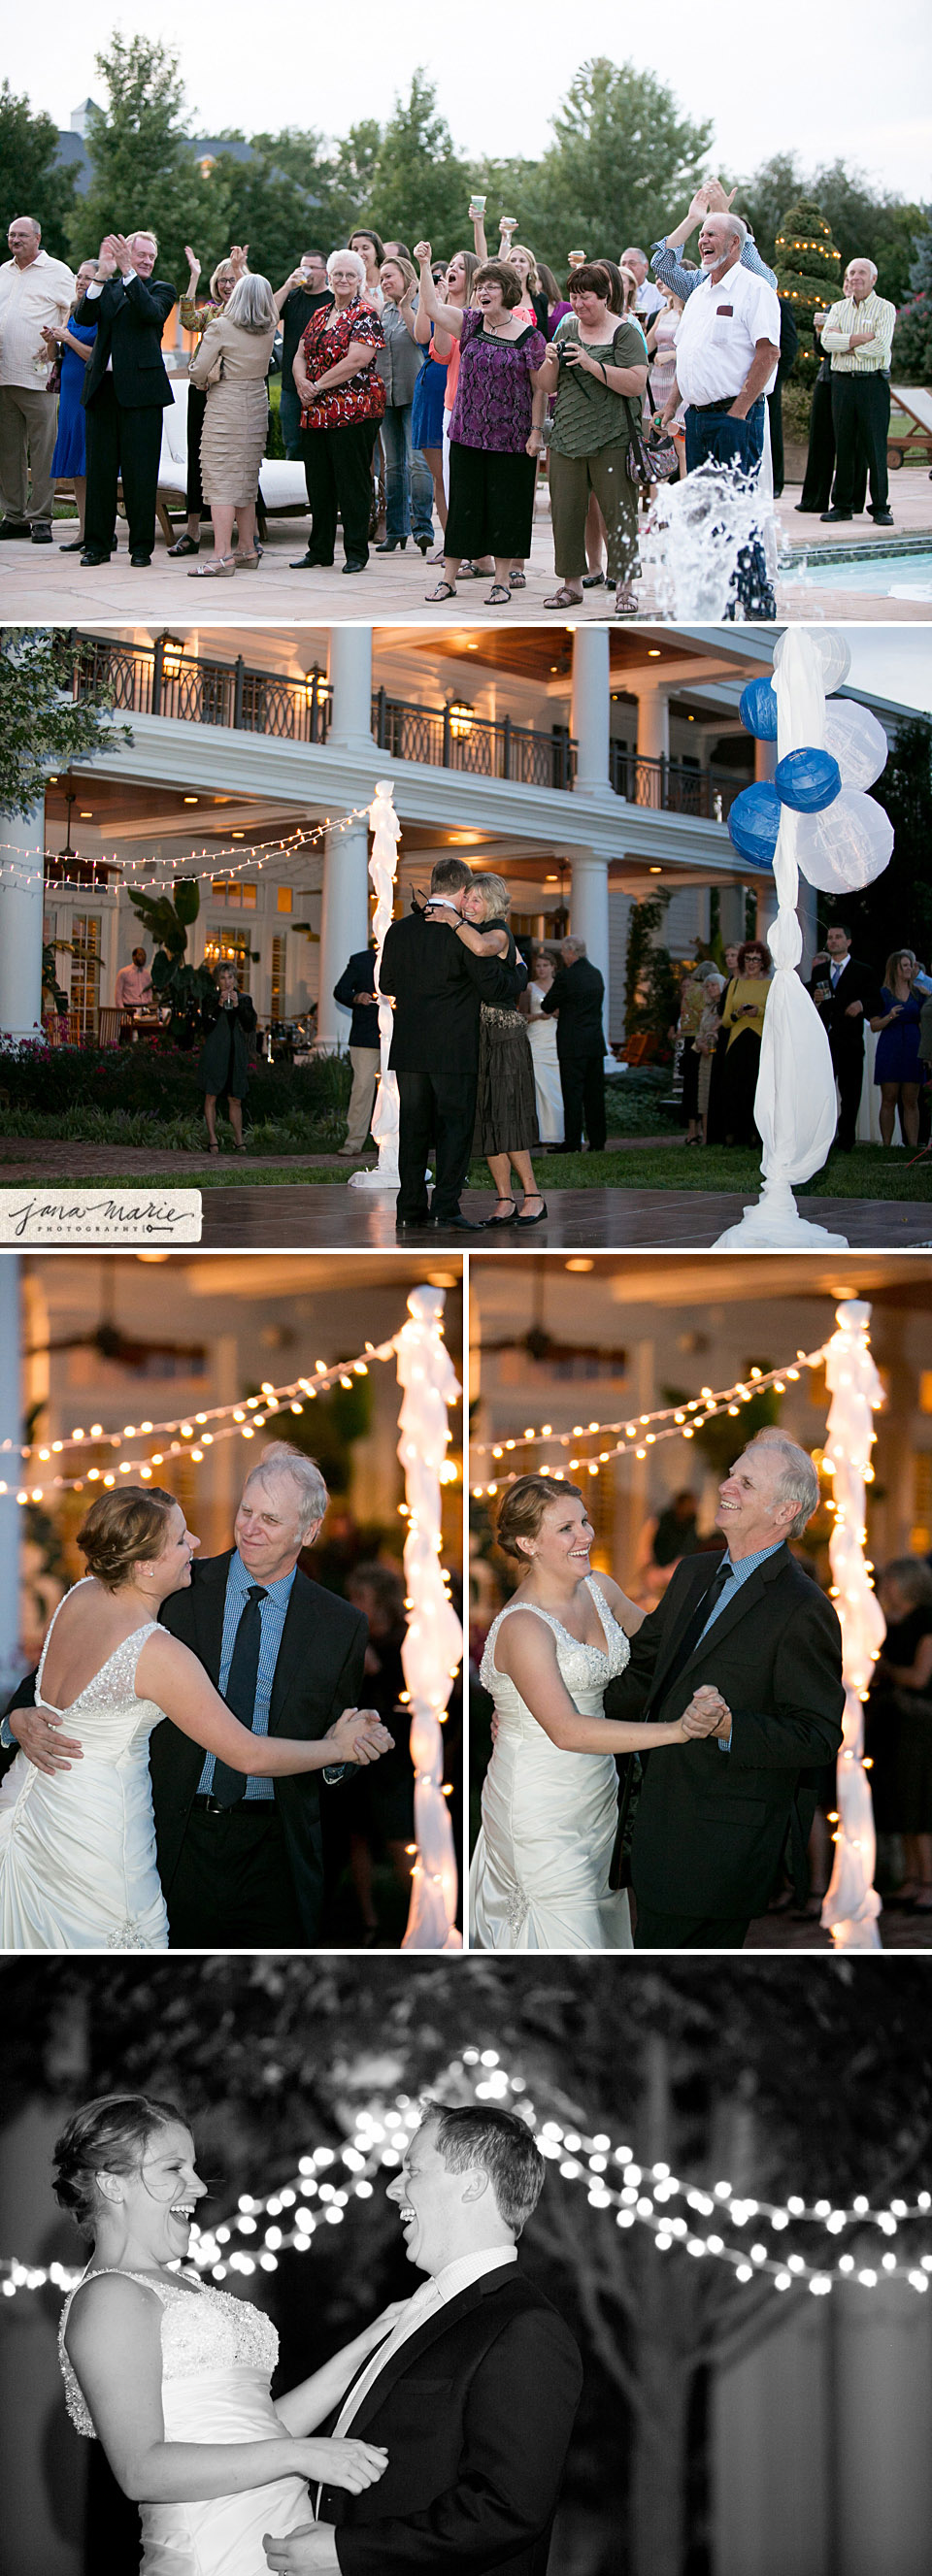 KC weddings, First dance, outdoor receptions, natural light photography